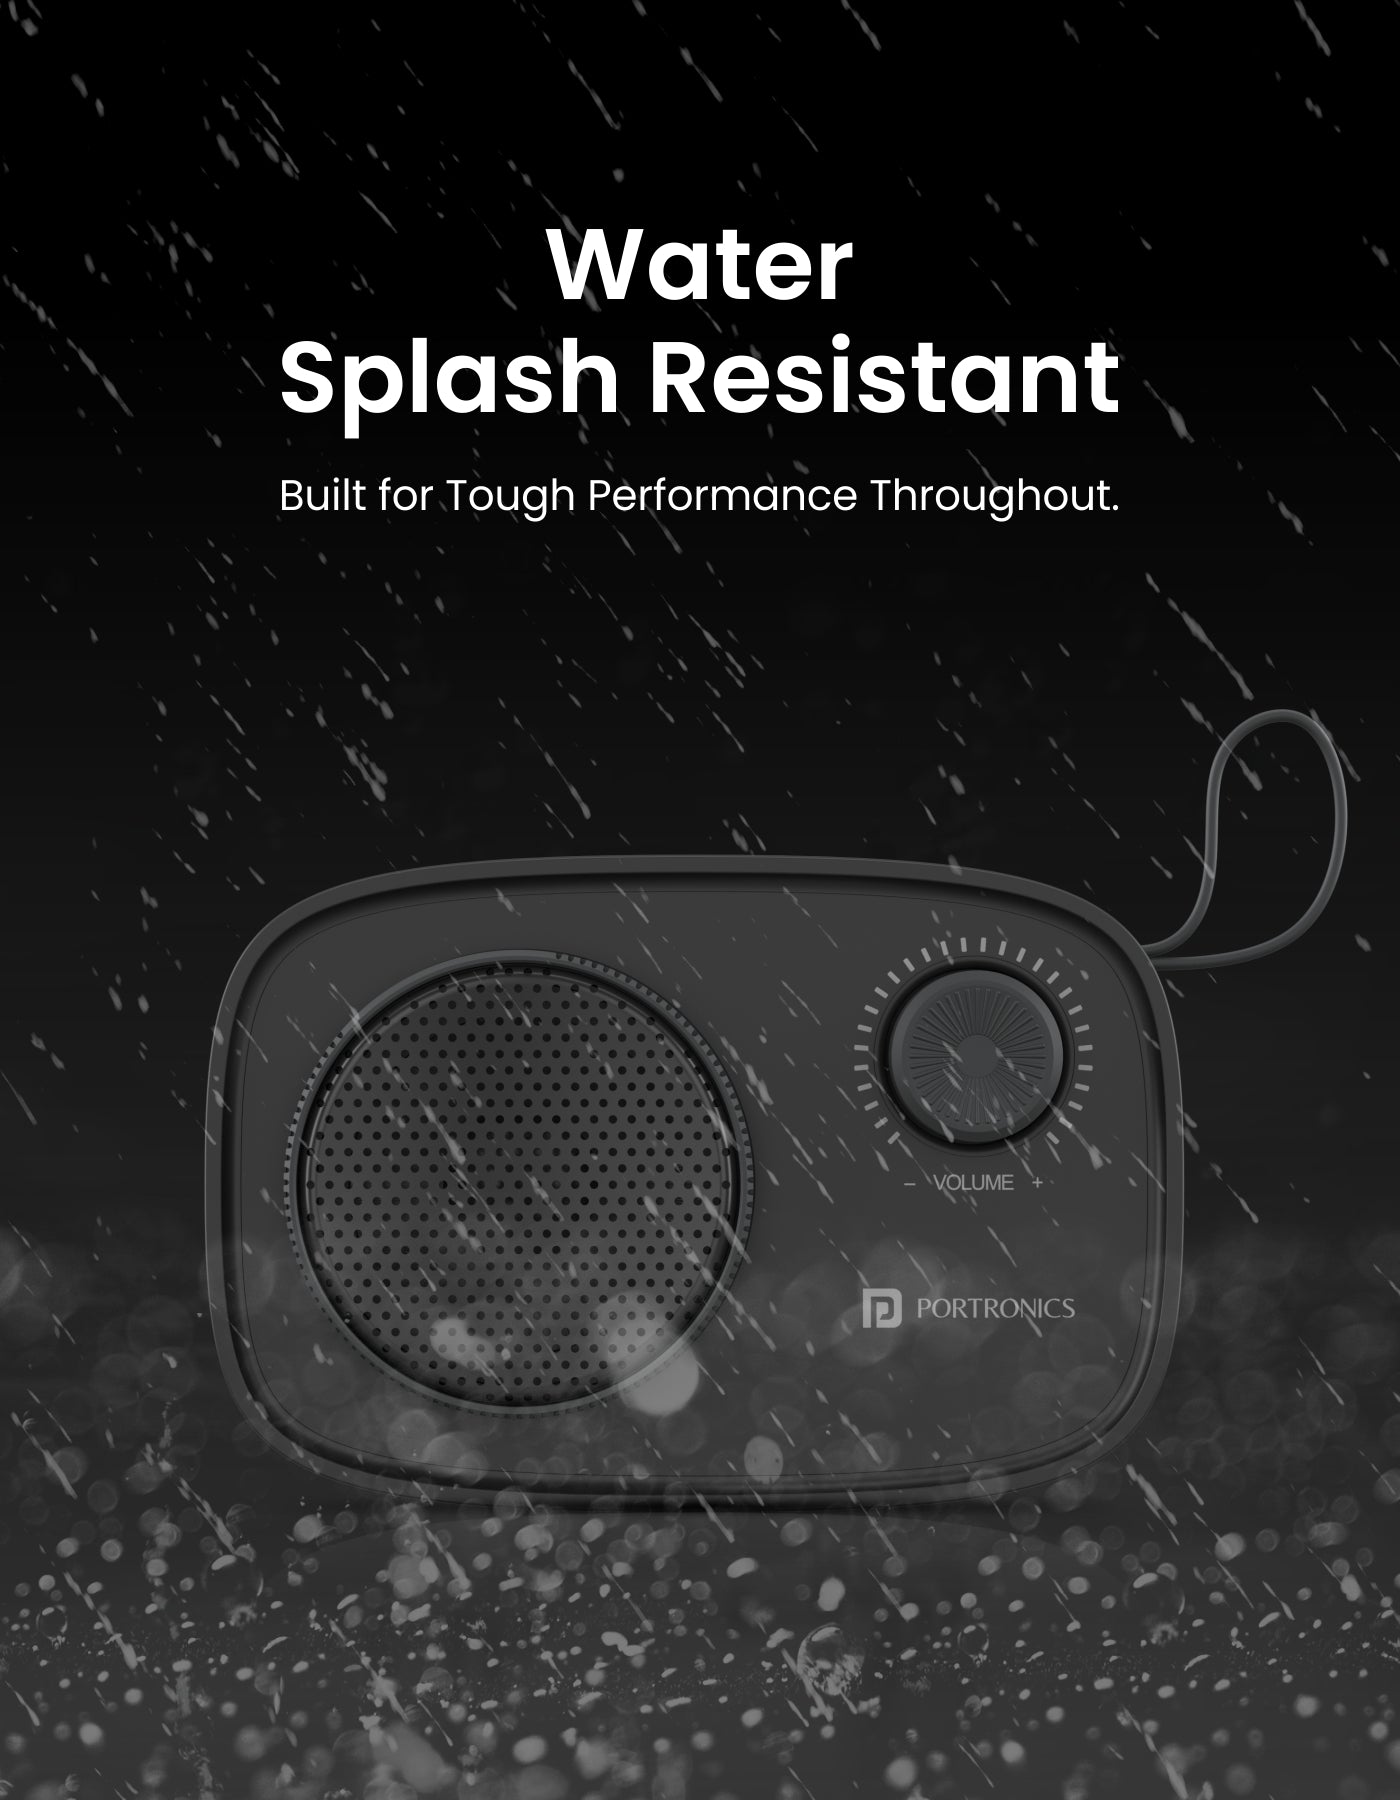 Portronics Pixel 2  Best mini Wireless Bluetooth Speaker 3W with Volume Knob and water proof body